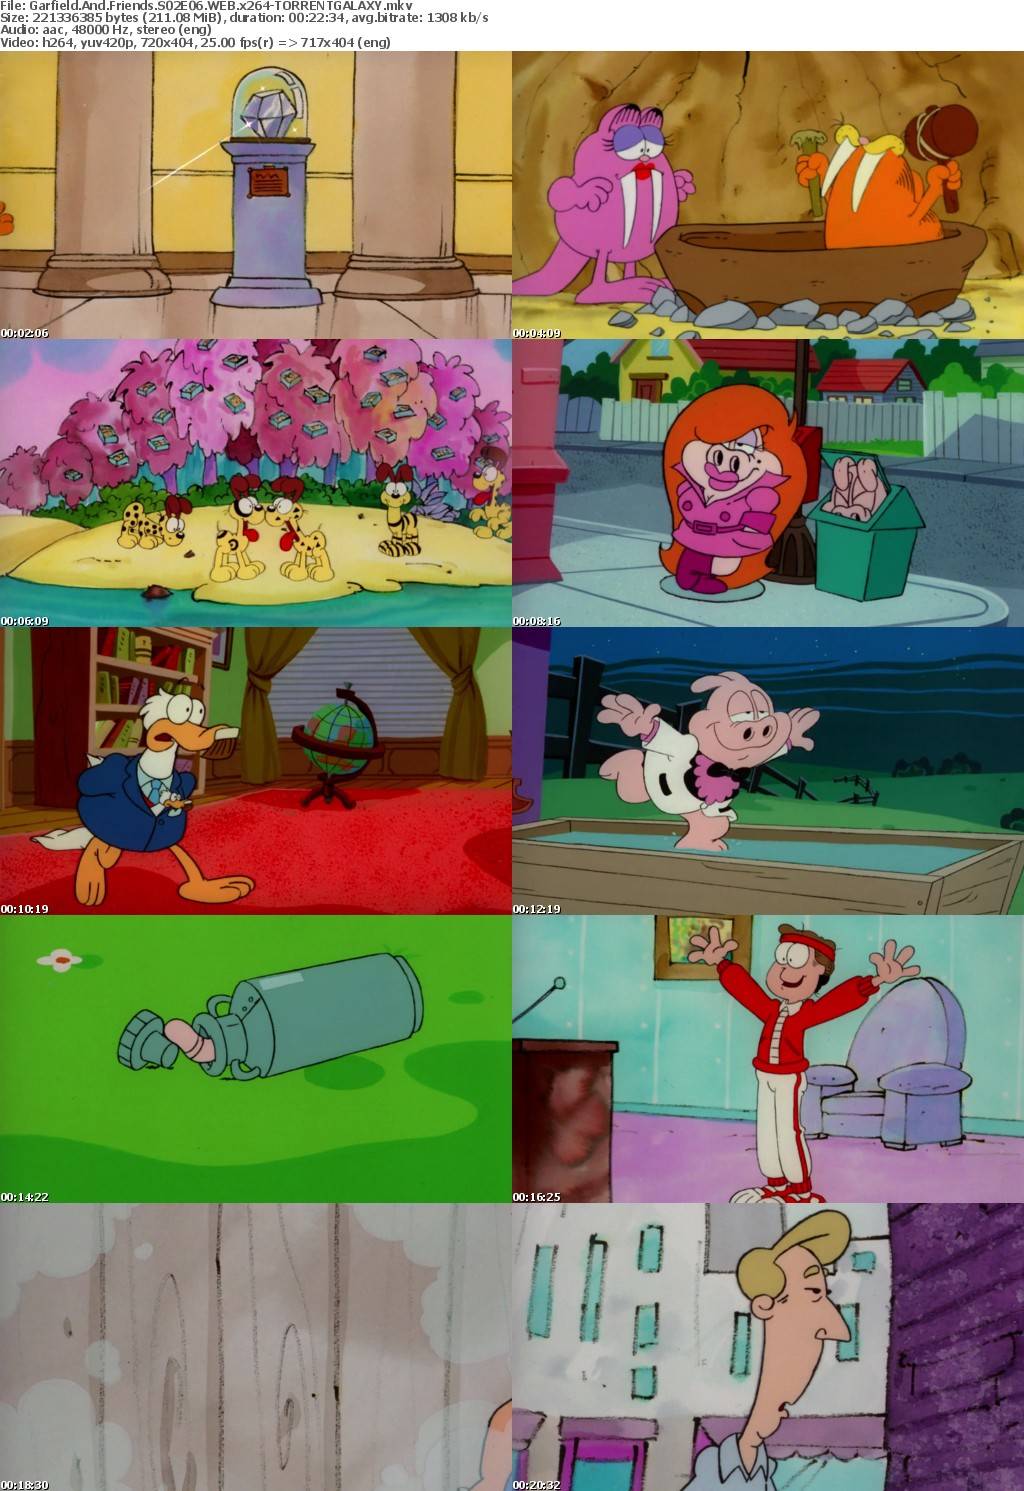 Garfield And Friends S02E06 WEB x264-GALAXY